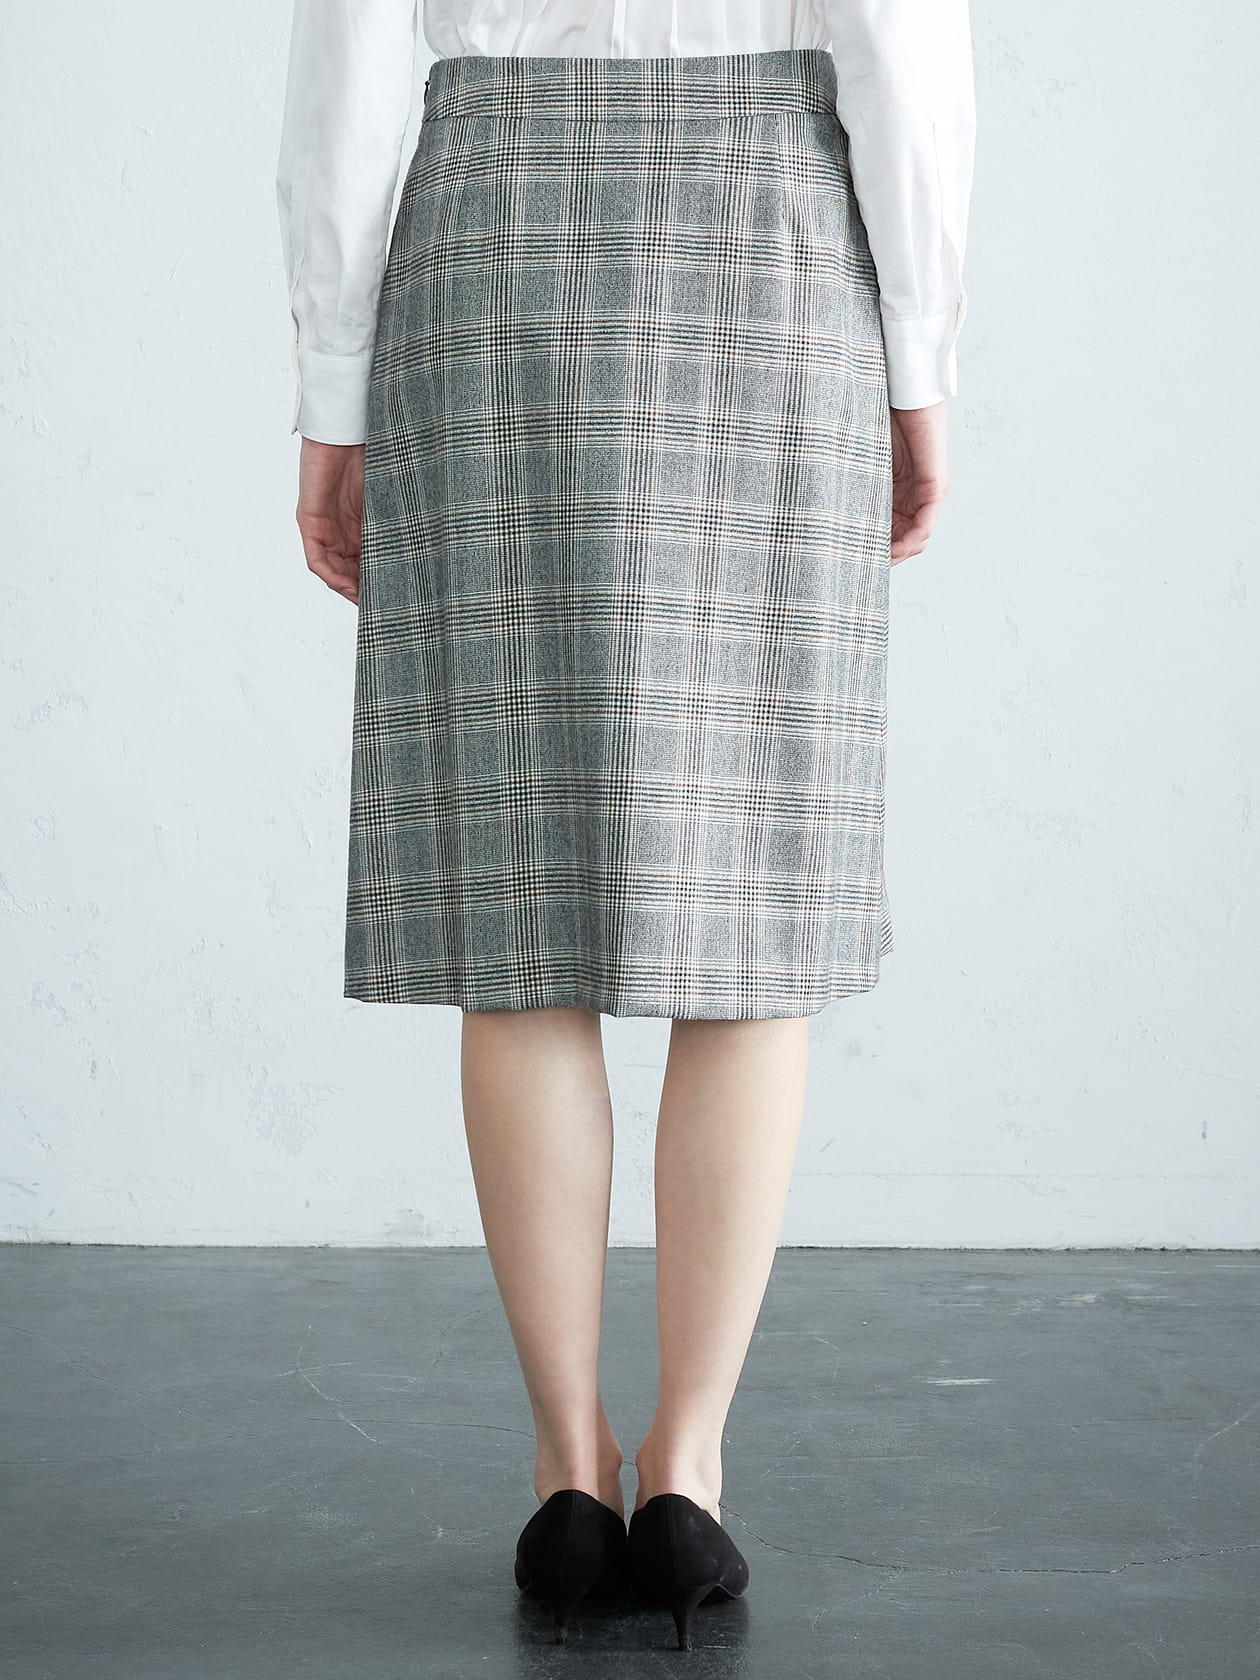 Aquascutum Aquascutum Tweed Skirt Size UK 12 Dogtooth Check Wool Black Brown A Line Pleat 